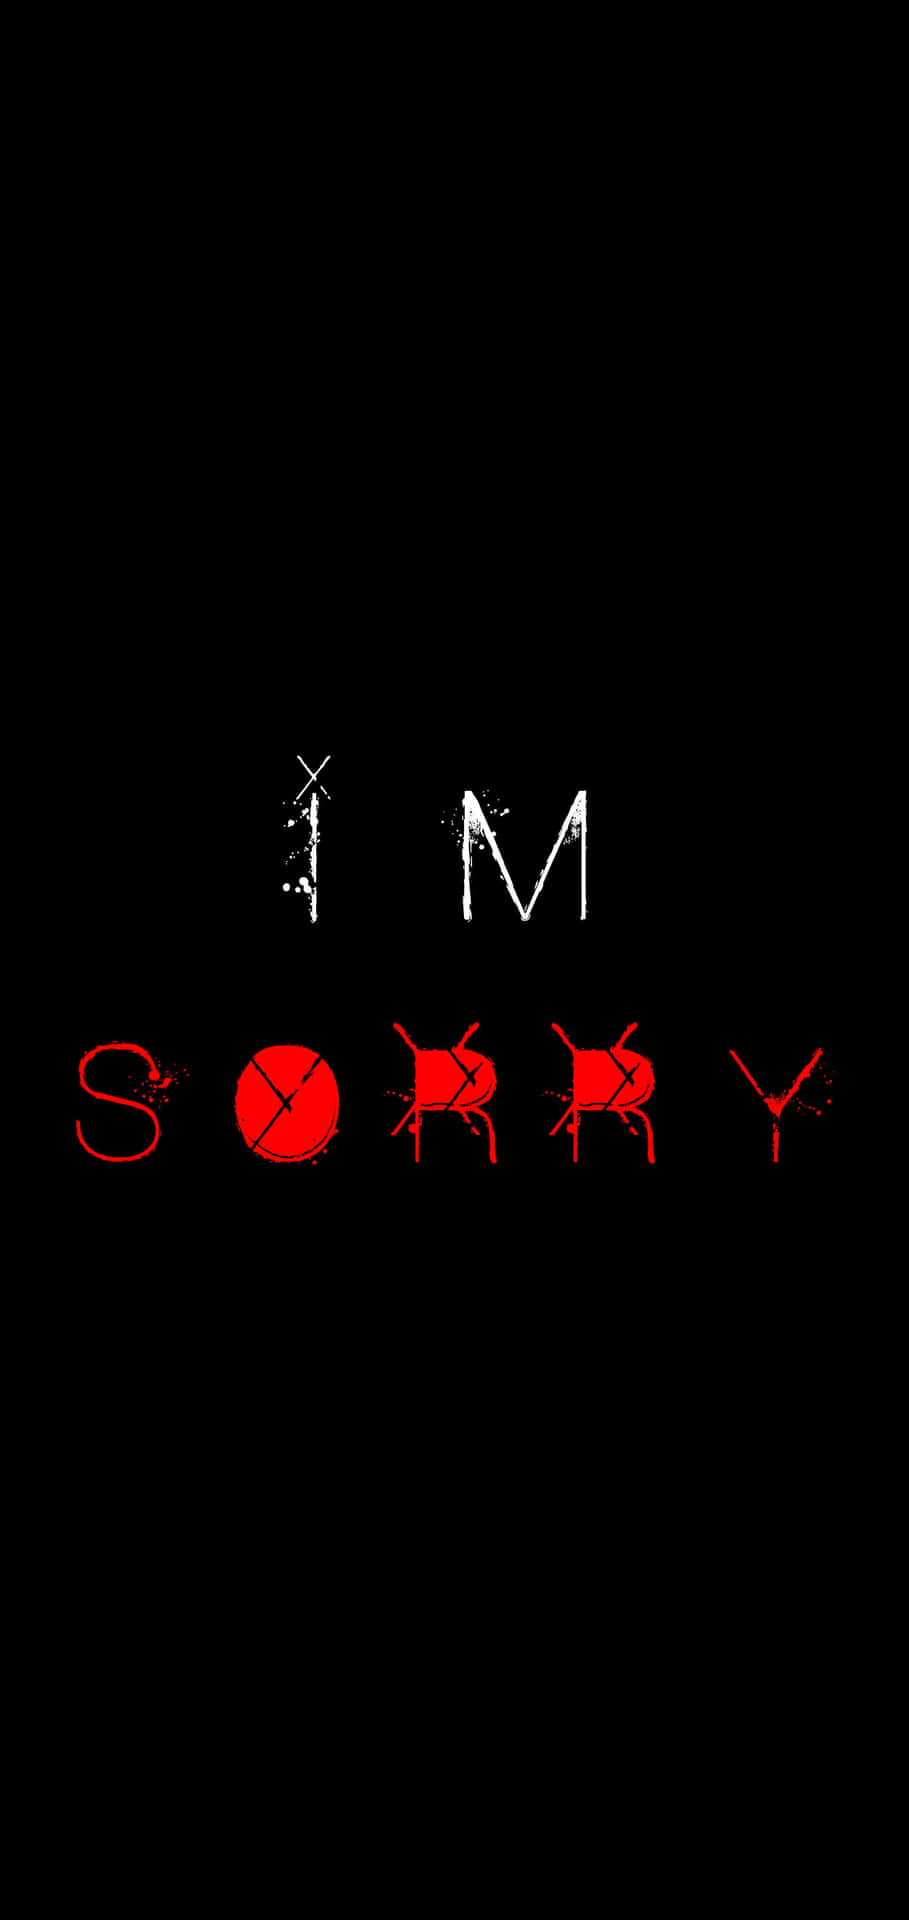 Midispiace - Mi Dispiace - Mi Dispiace - Mi Dispiace - Mi Dispiace